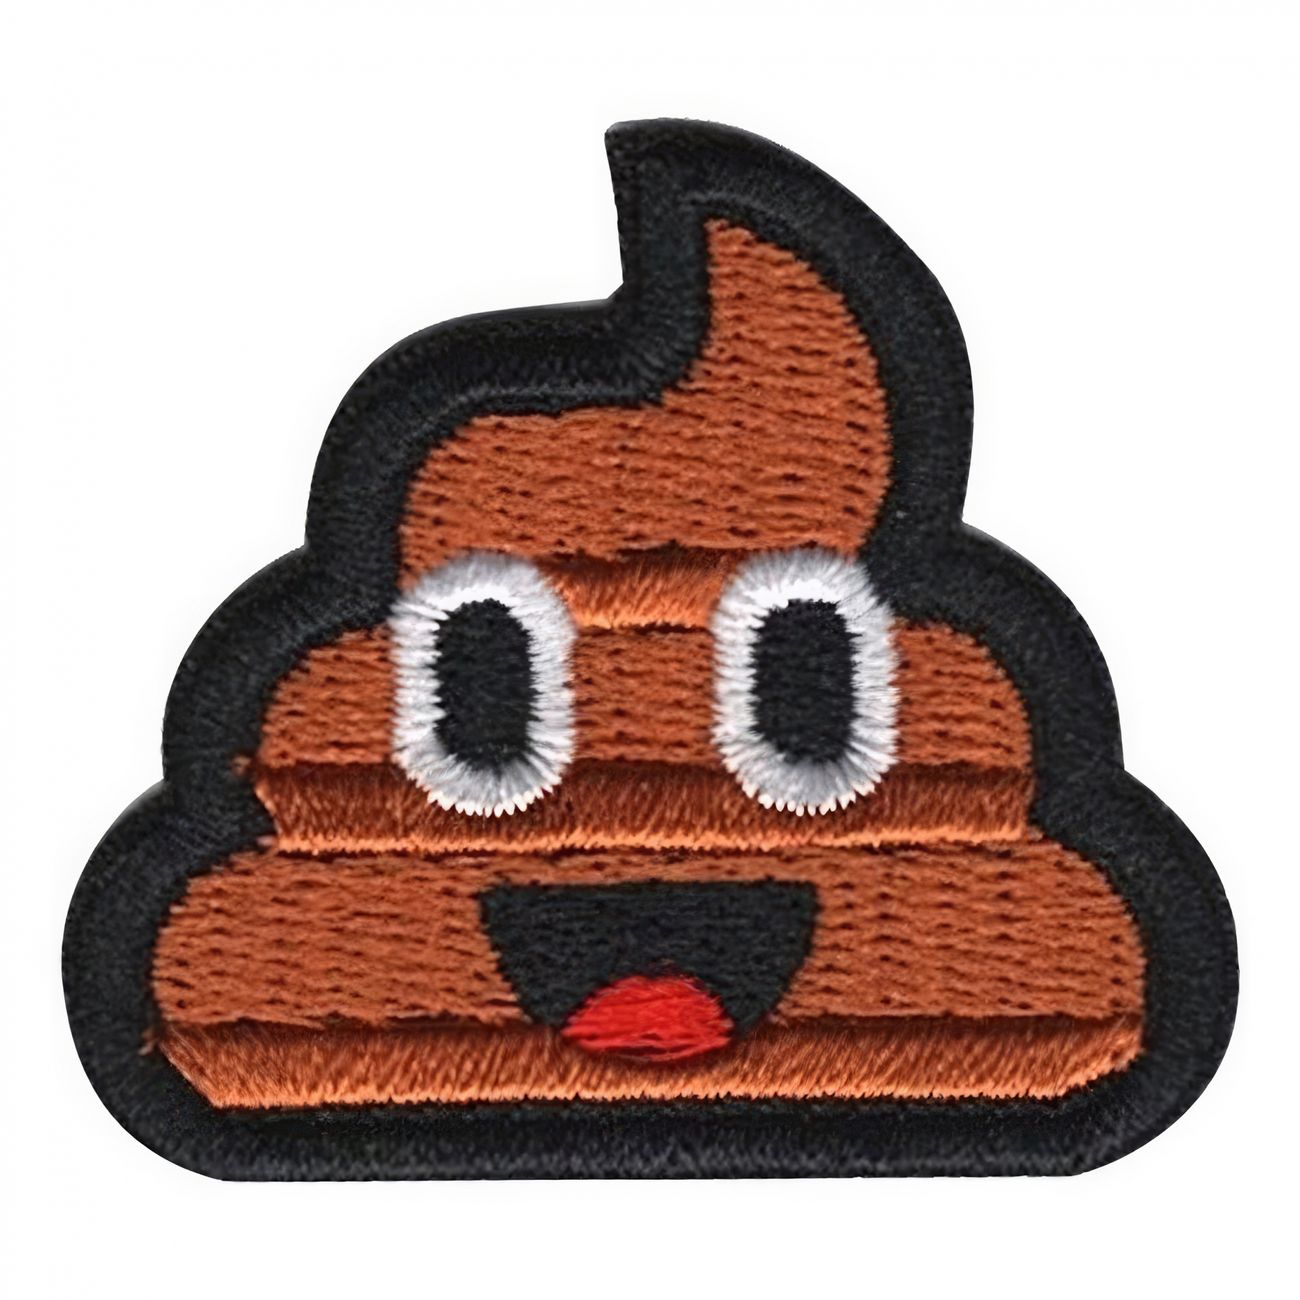 tygmarke-emoji-pile-of-poo-c-94049-1